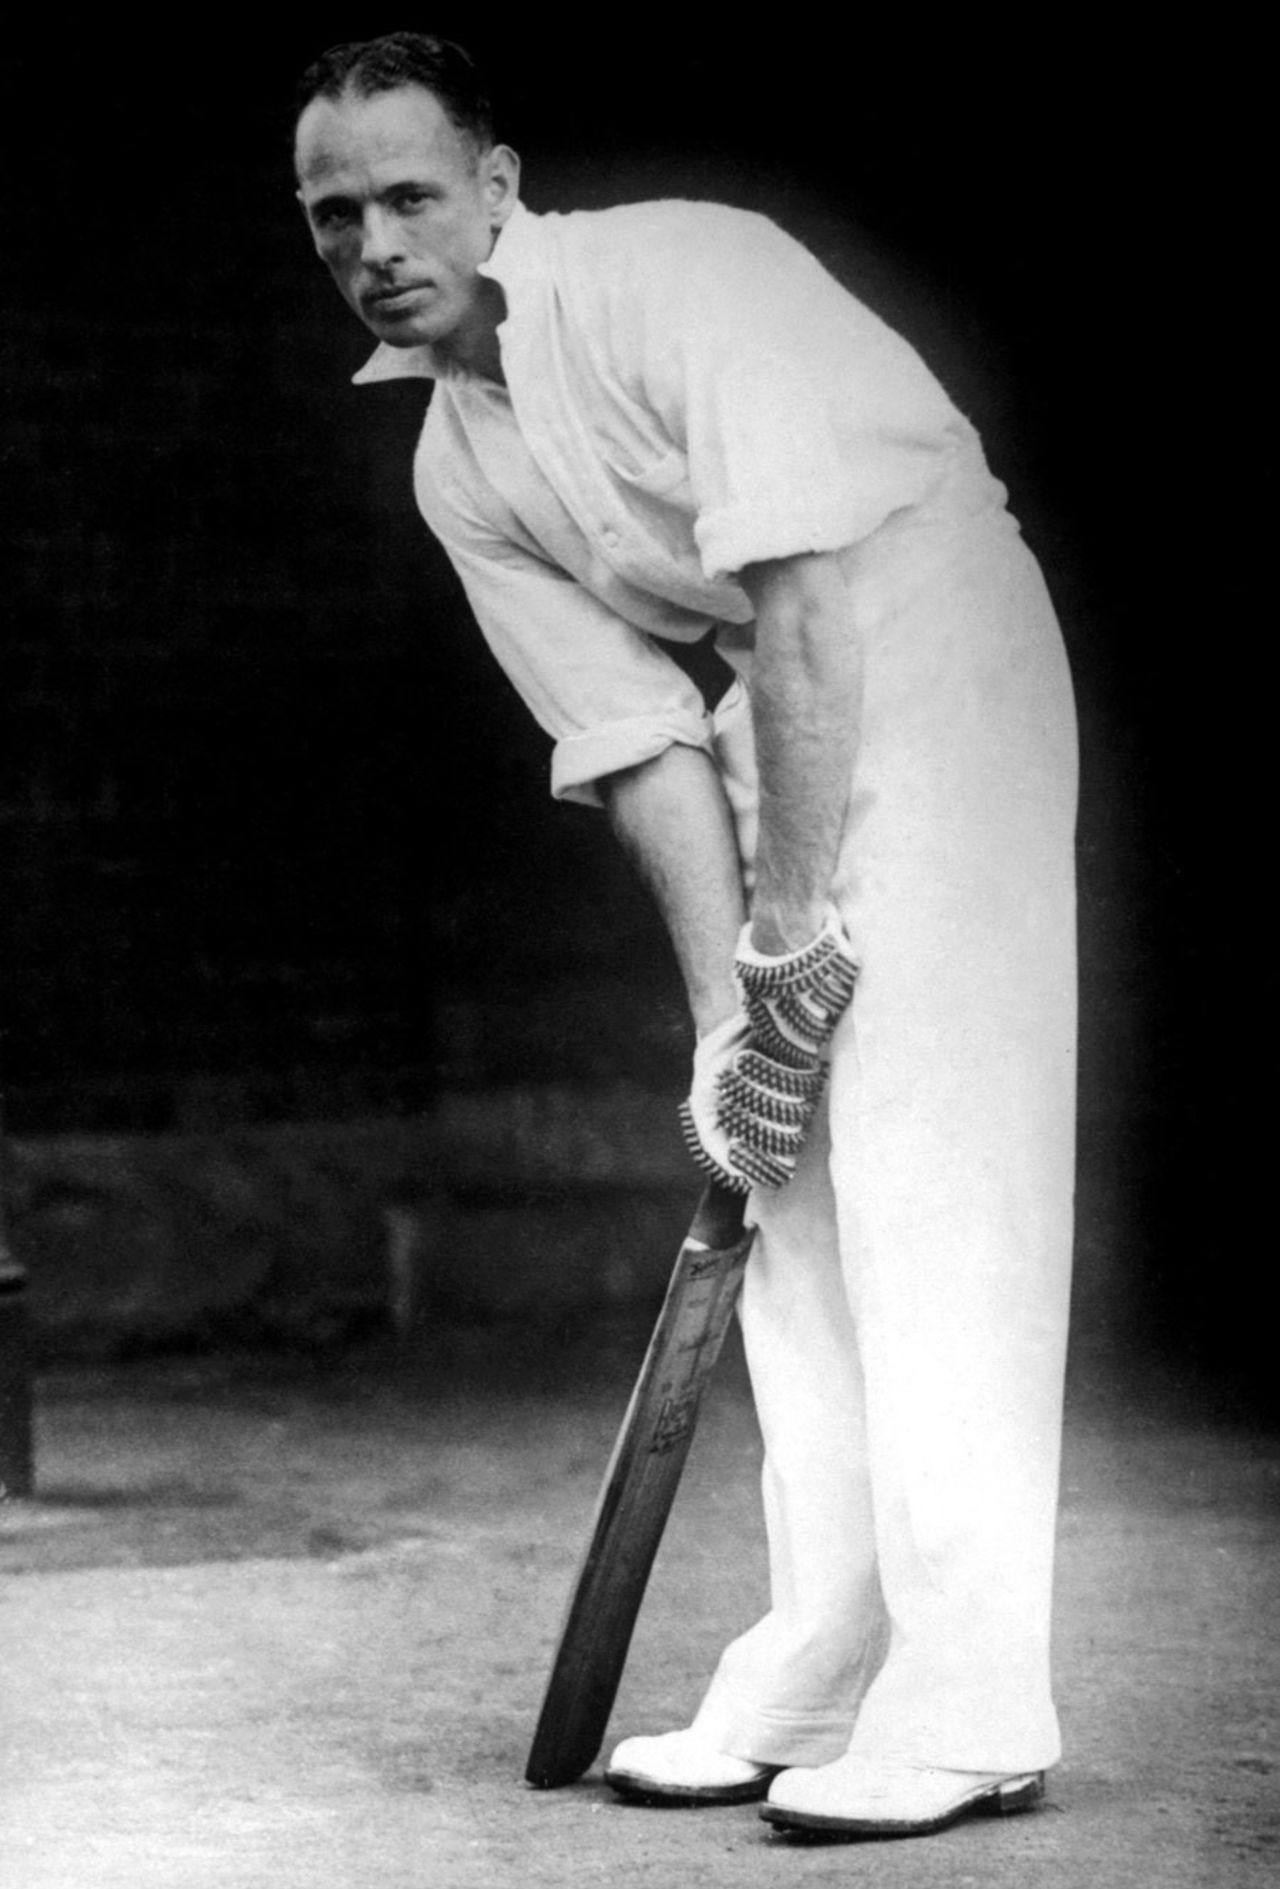 Jack Fingleton in his batting stance, February 1, 1934